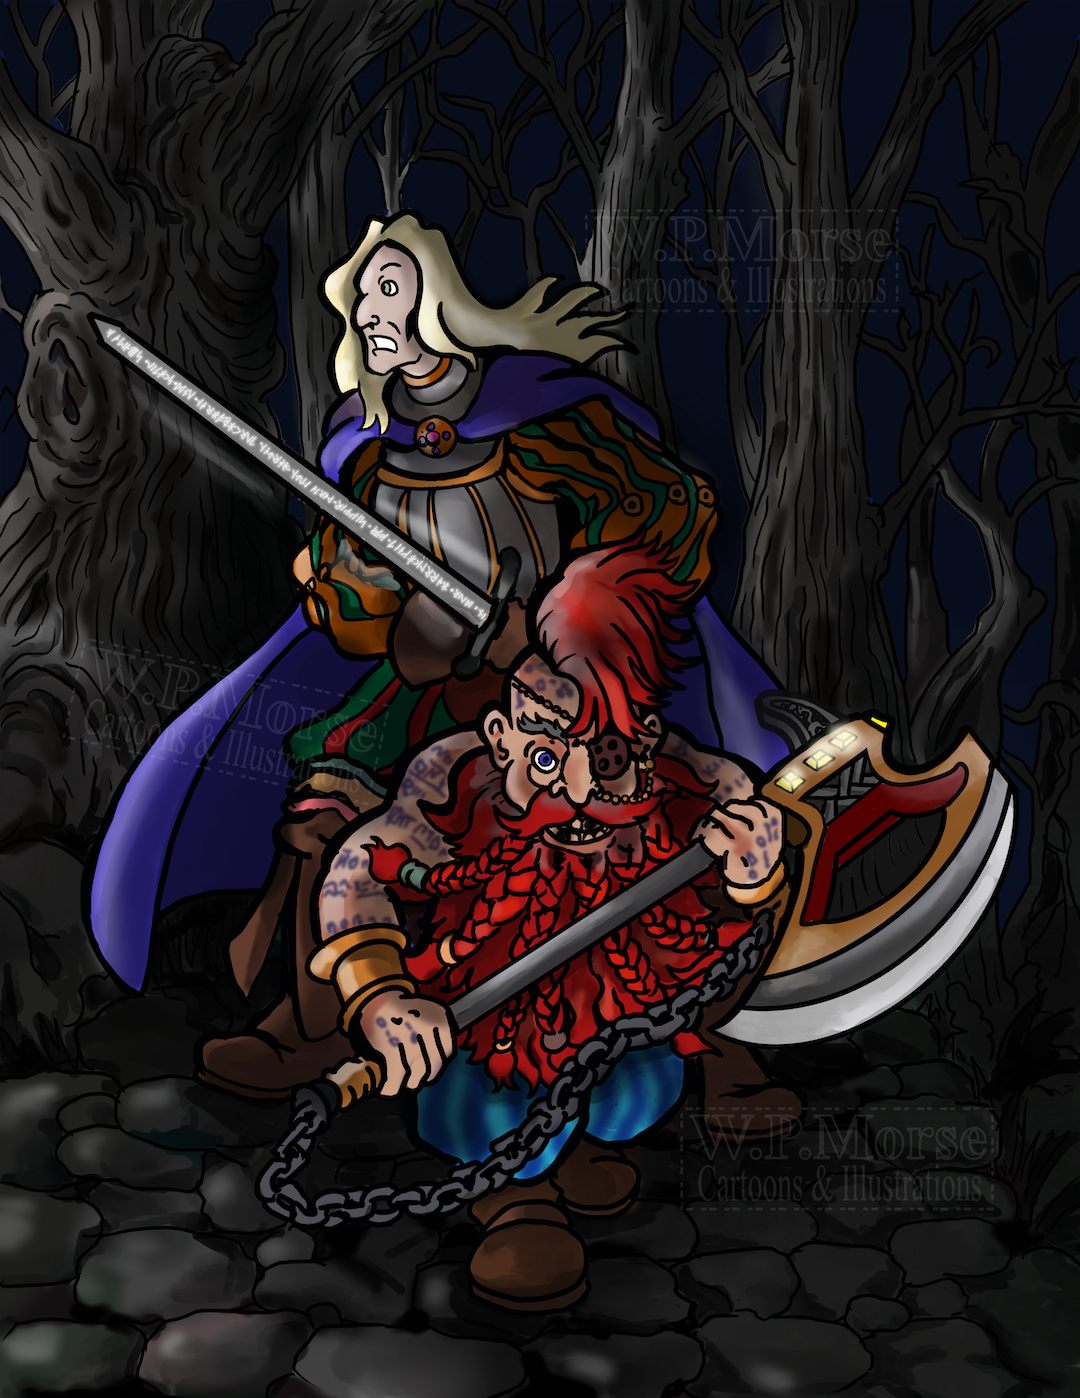 Warhammer fantasy games workshop Gotrek Gurnisson Felix Jaeger, dwarf trollslayer slayer axe sword forest armor mohawk